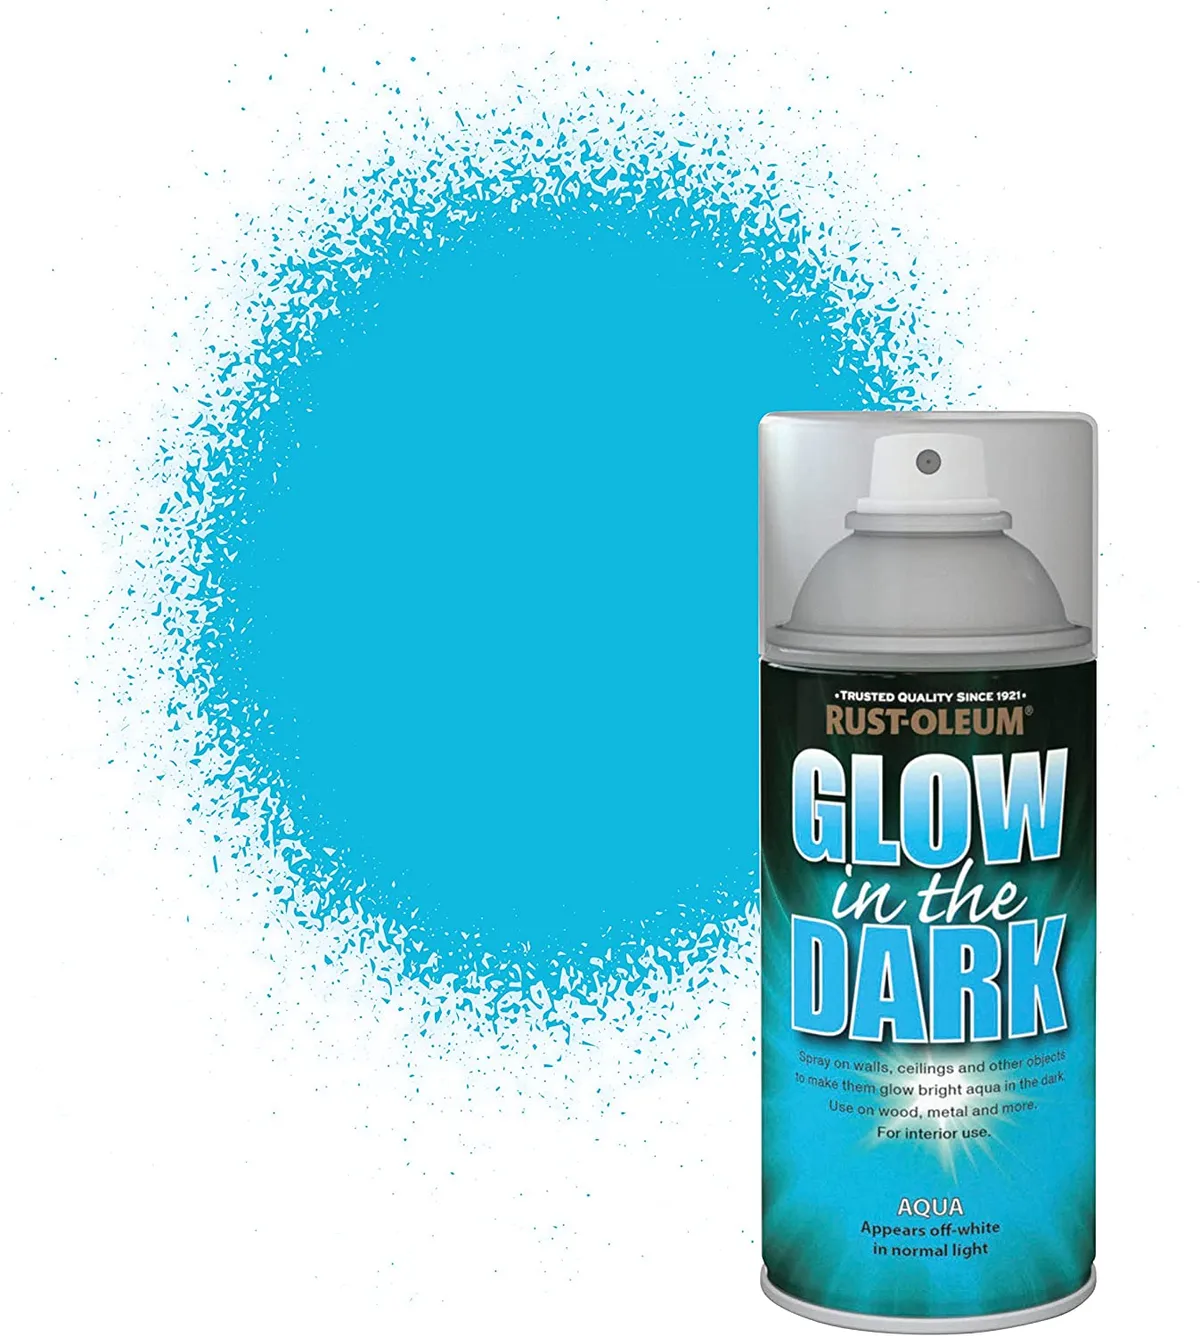 The preferred Spray Paint brand. Get creative